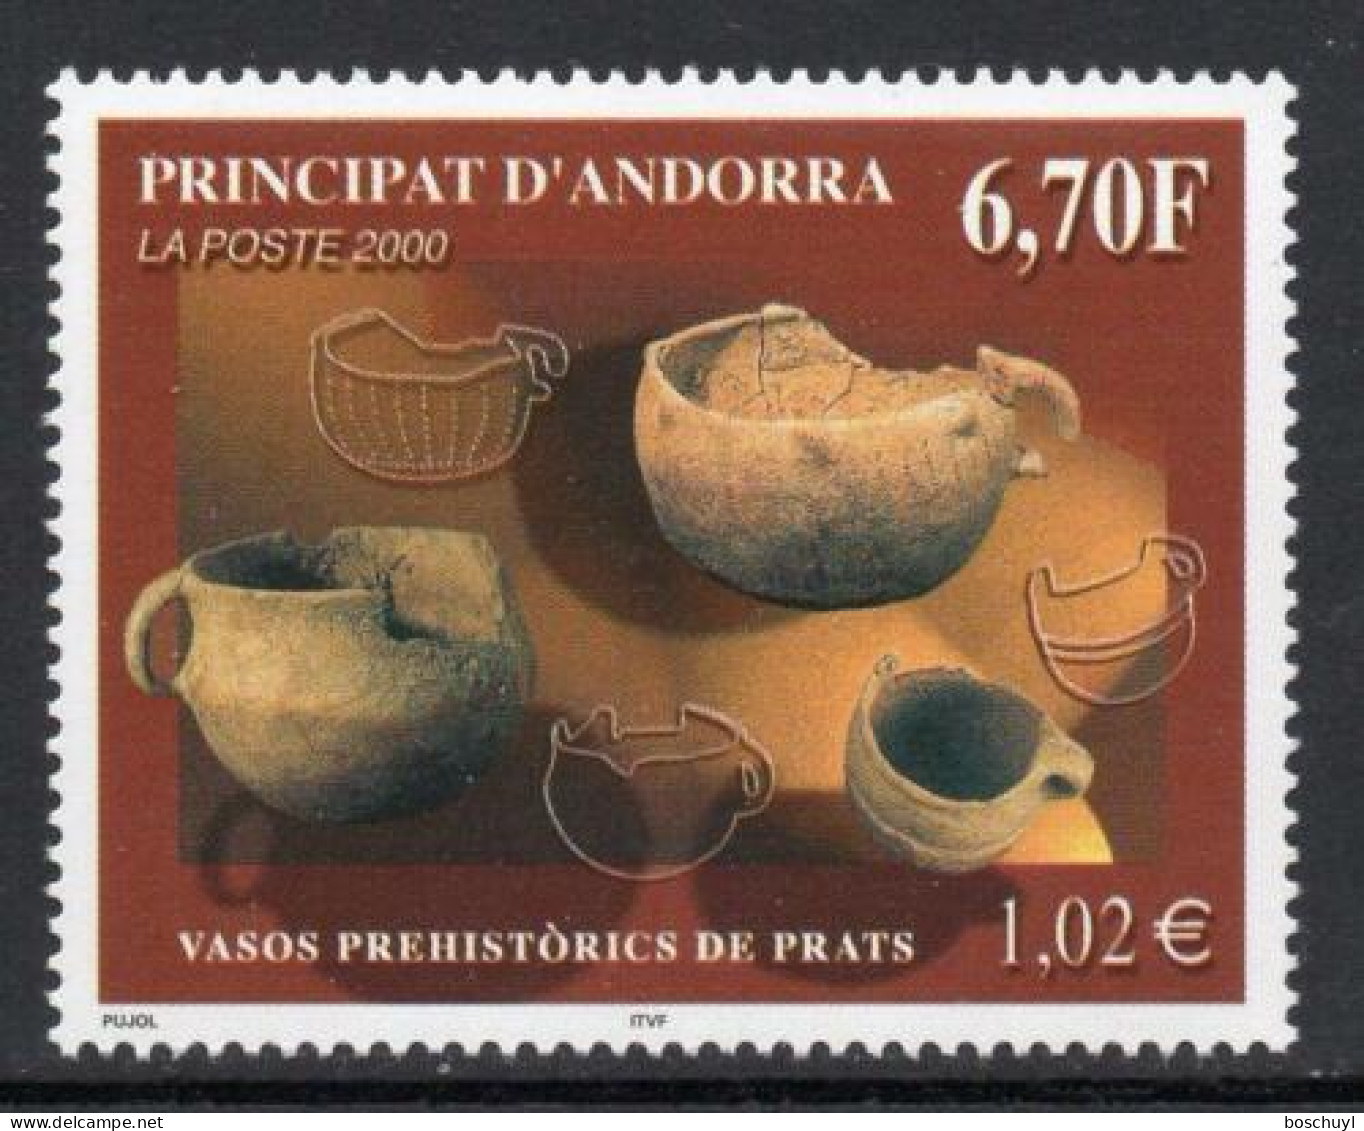 Andorra, French, 2000, Prehistoric Pottery, Ceramics, Archaeology, MNH, Michel 559 - Nuovi